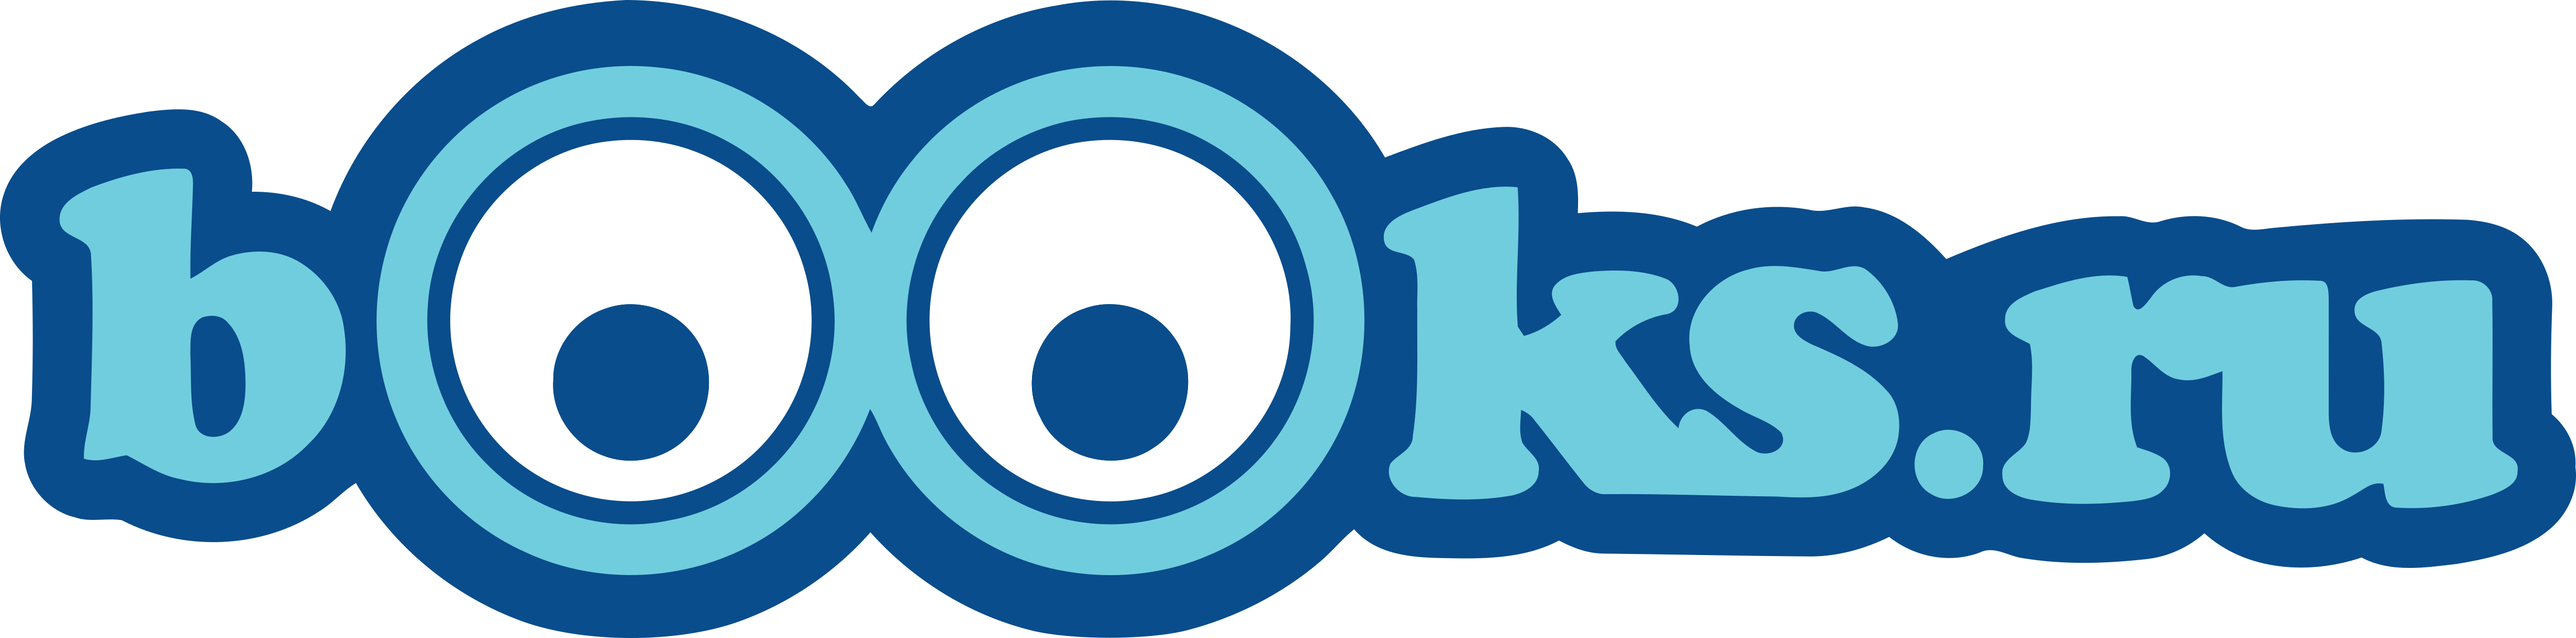 Motexc ru. Book.ru. Логотип для книжного интернет магазина. Букс ру. Book.ru логотип.